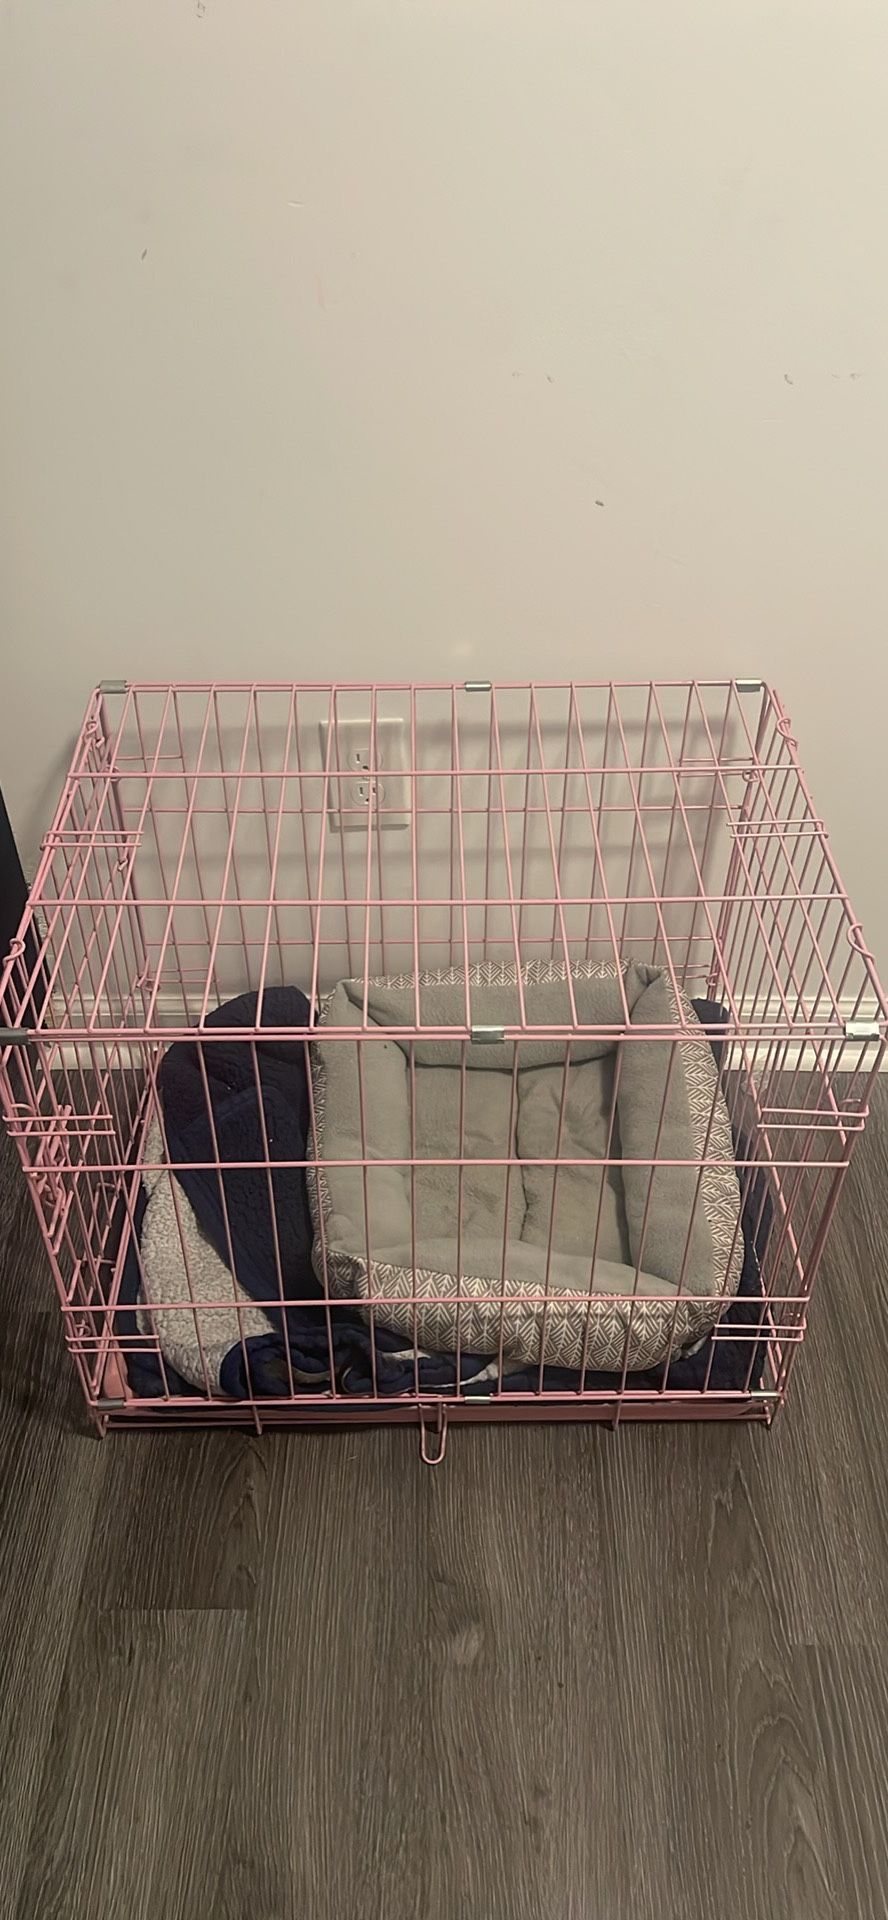 Pink Dog Cage 